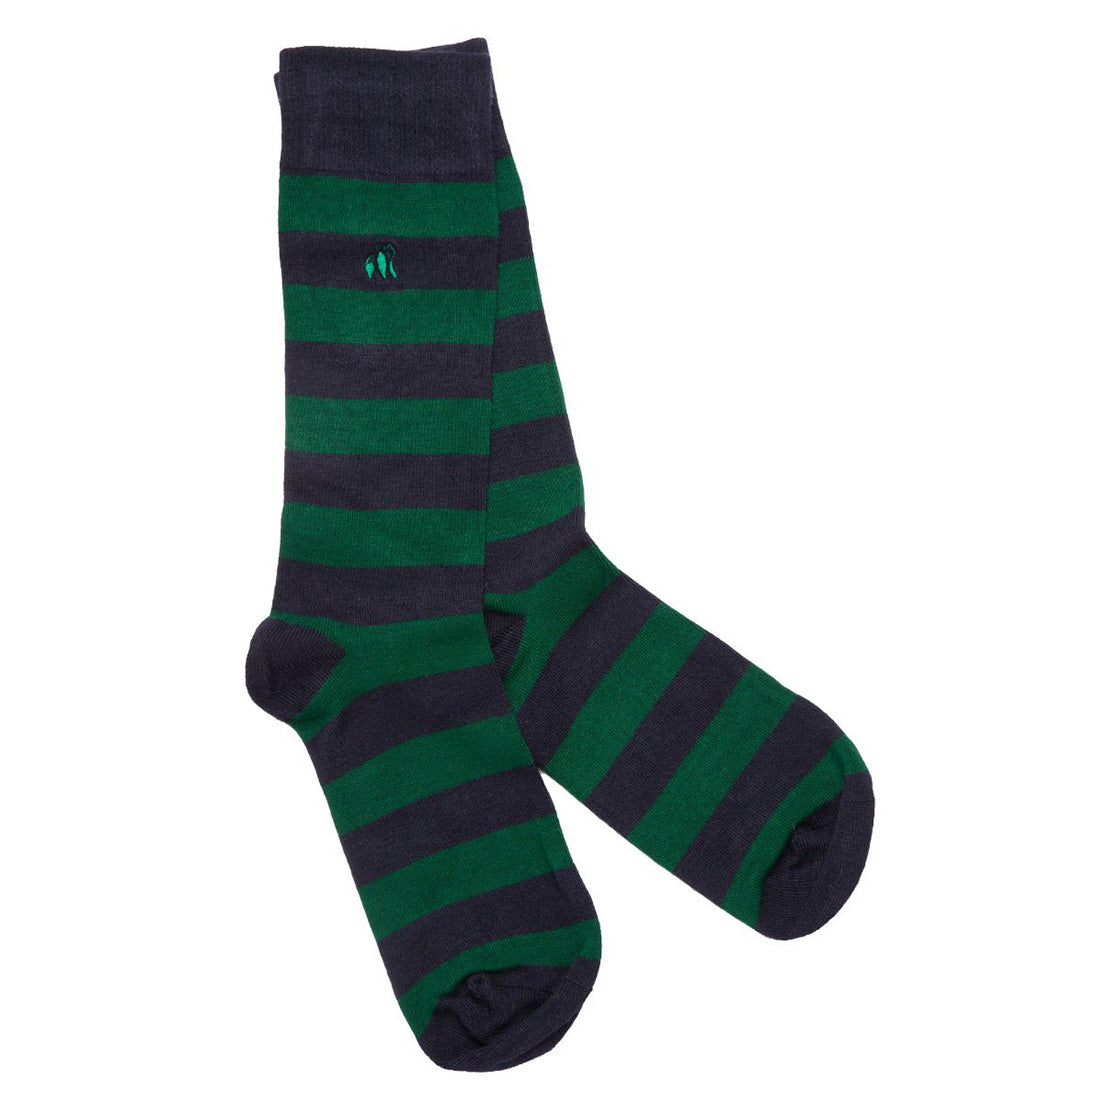 socks-racing-green-striped-bamboo-socks-1.jpg